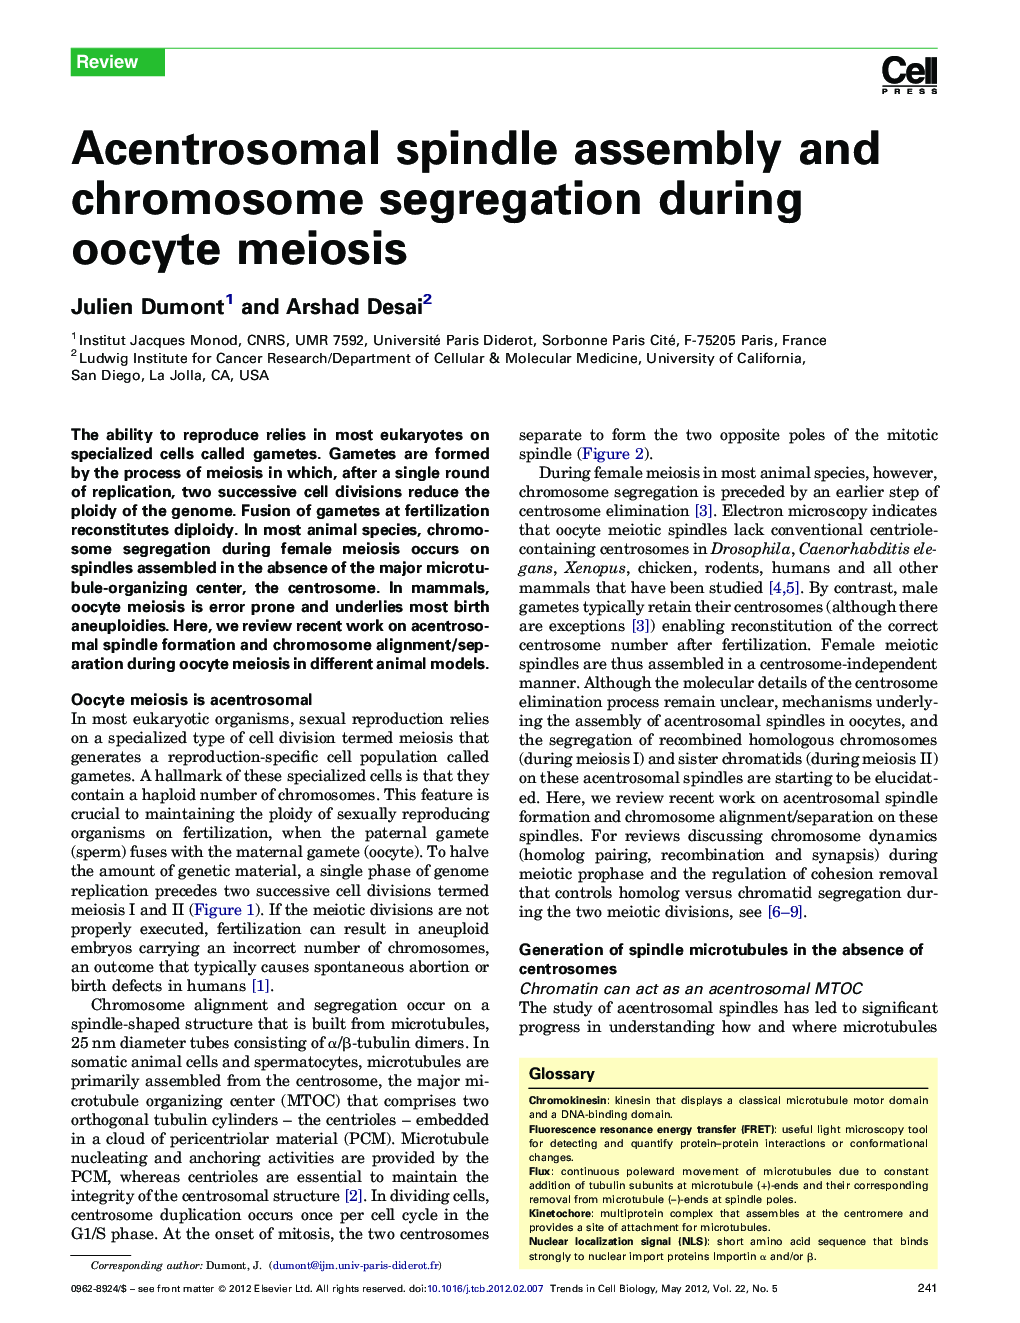 Acentrosomal spindle assembly and chromosome segregation during oocyte meiosis